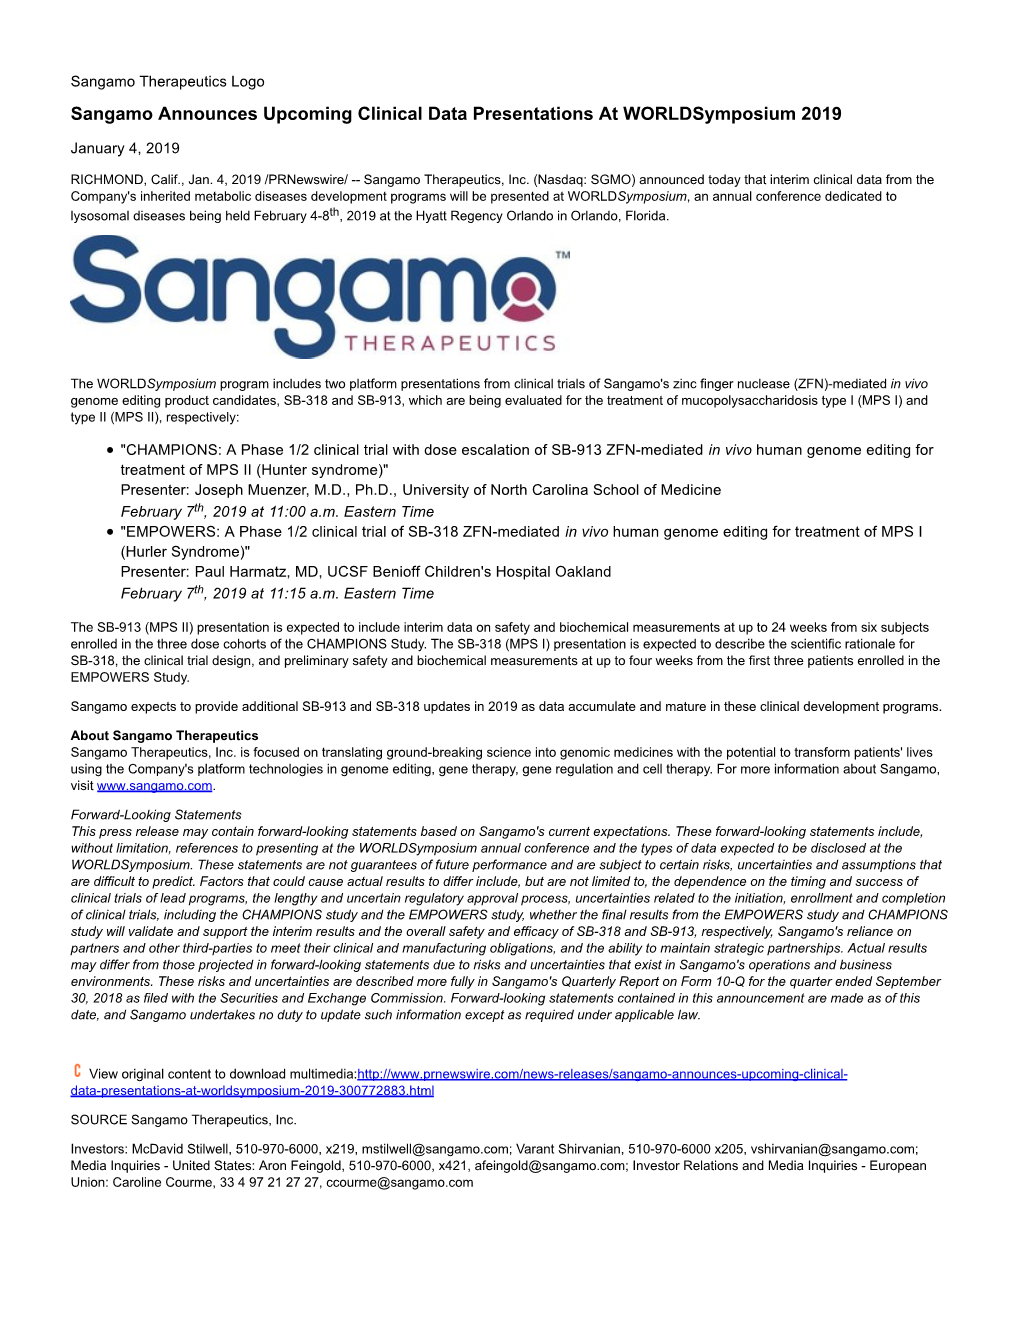 Sangamo Announces Upcoming Clinical Data Presentations at Worldsymposium 2019